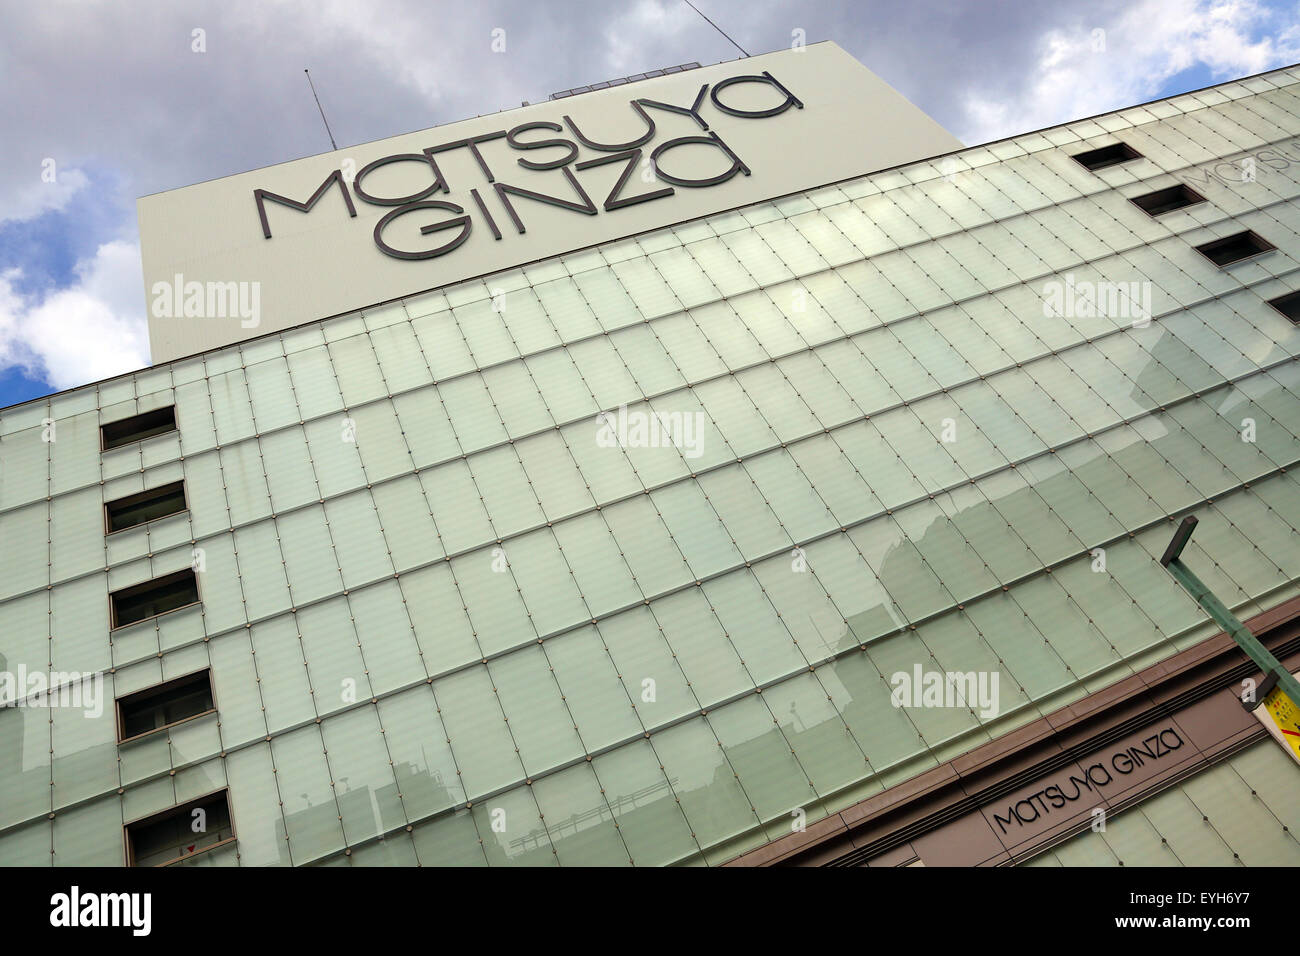 Matsuya Ginza Department Store and shops in Ginza, Tokyo, Japan Stock Photo